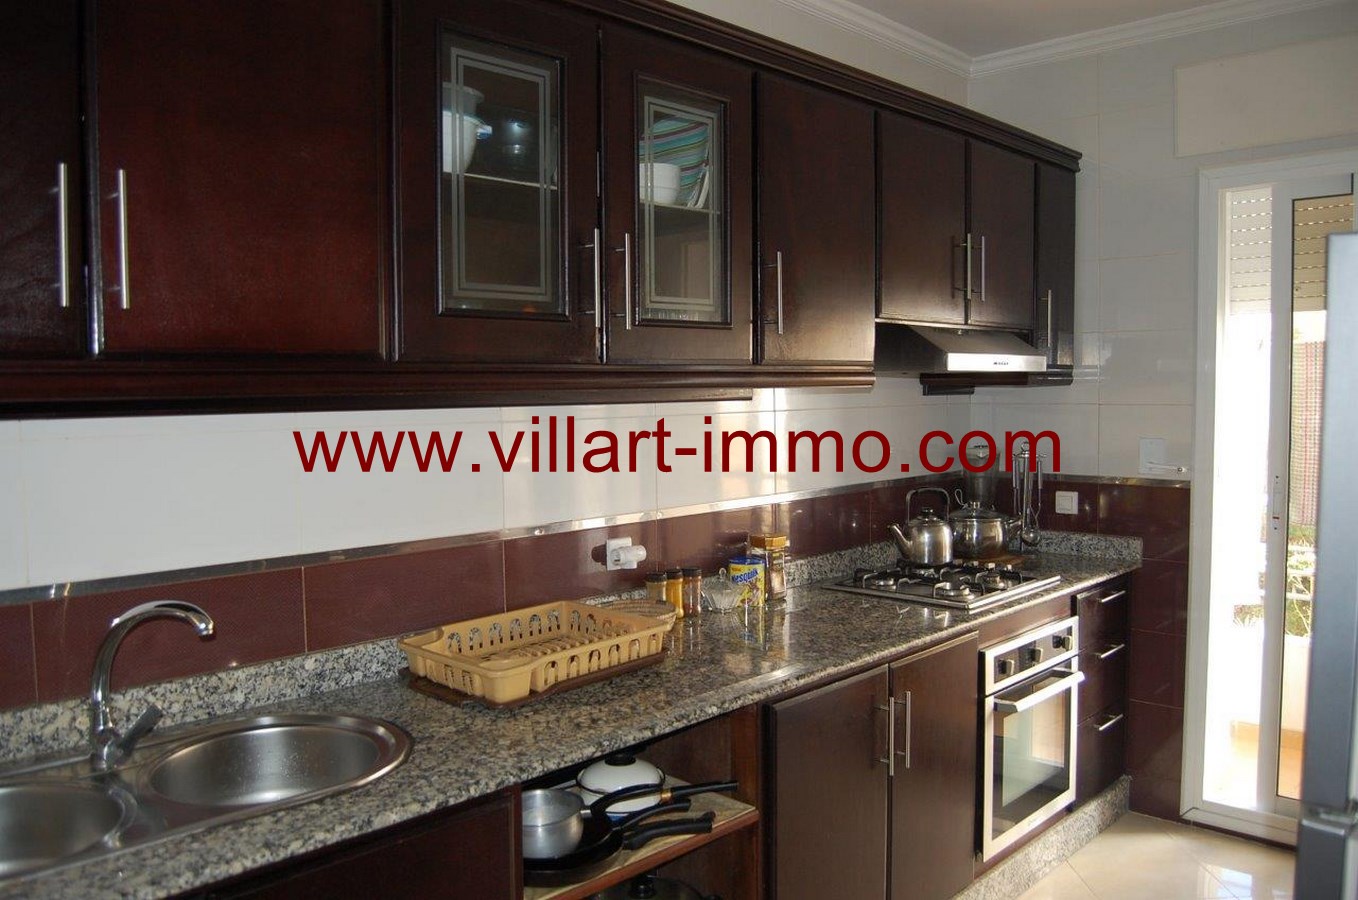 4-vente-appartement-tanger-marchan-cuisine-va366-villart-immo